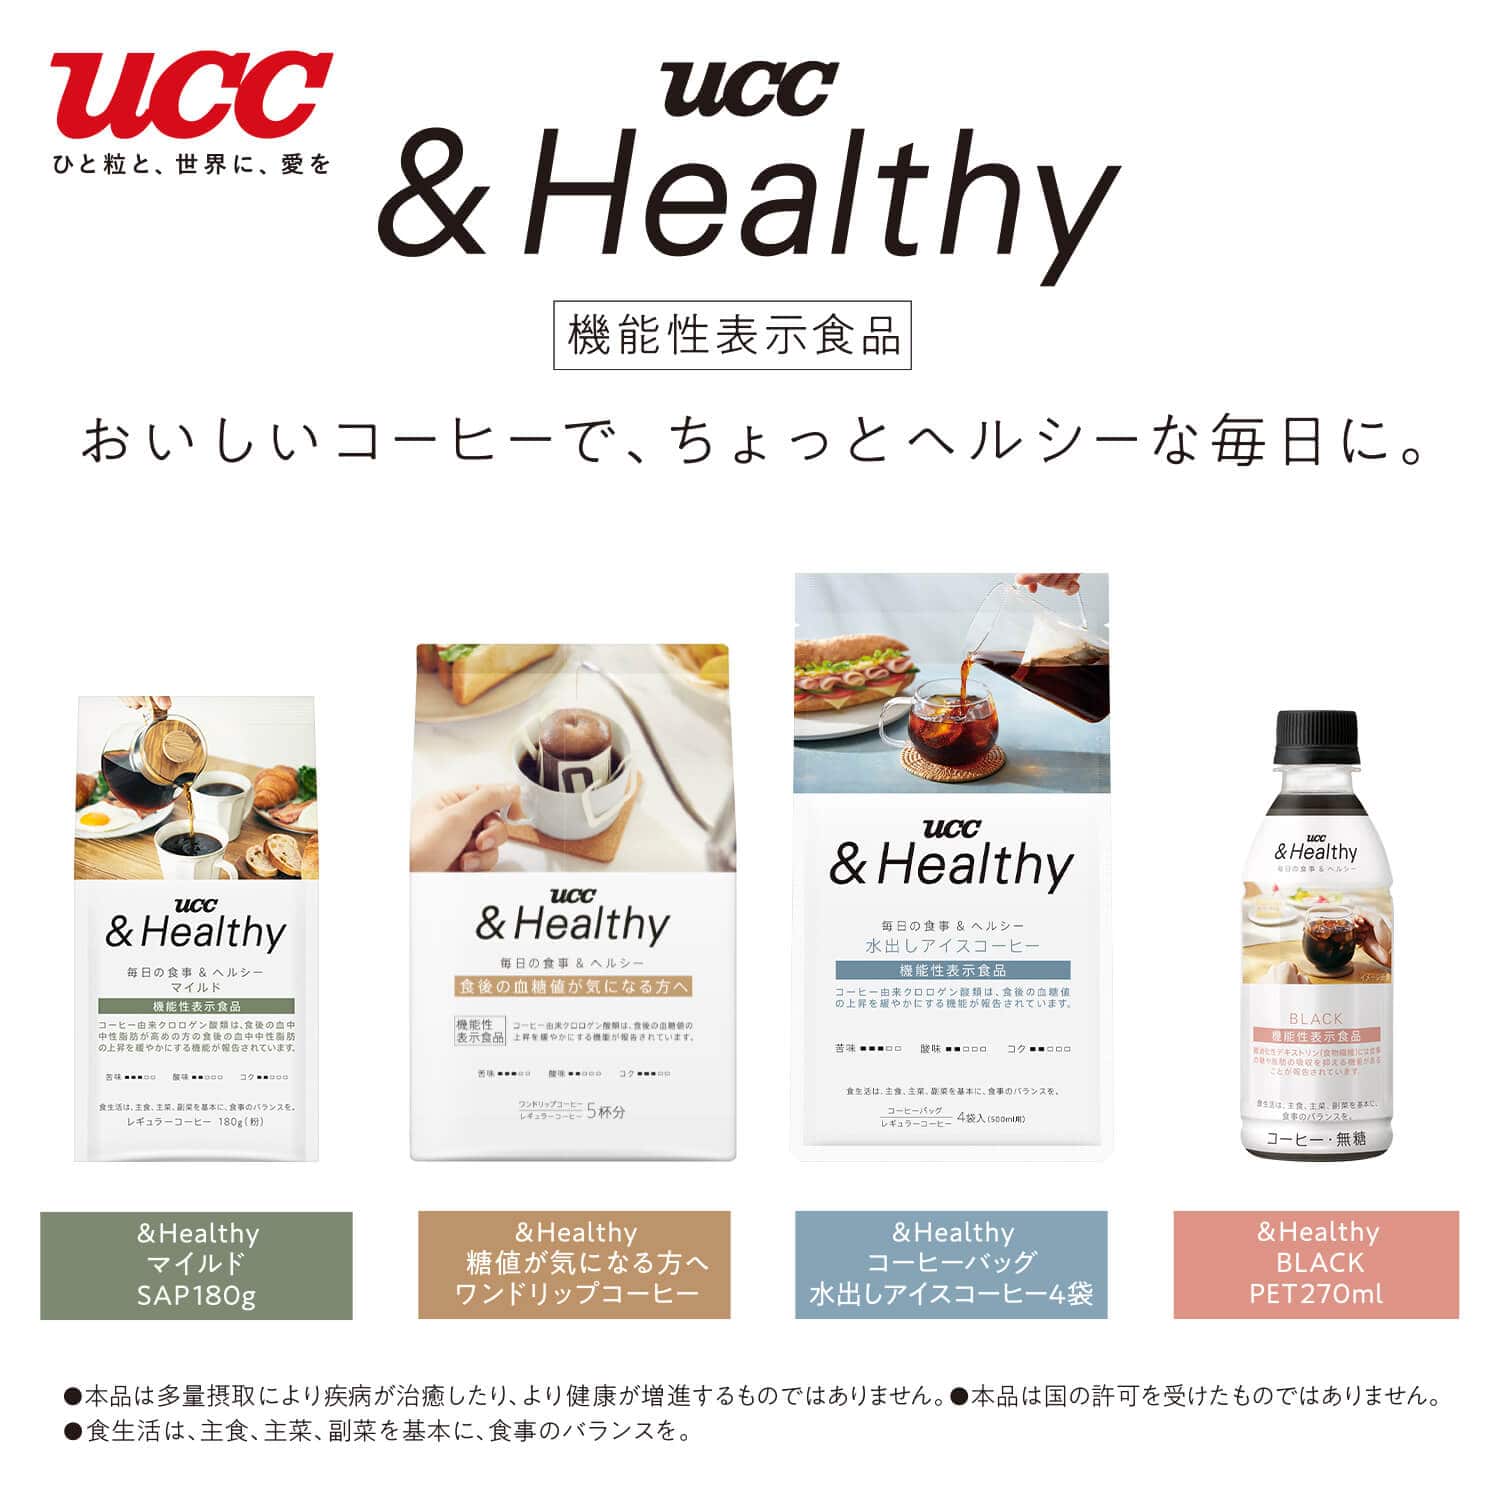 UCC &Healthy BLACK PET270ml